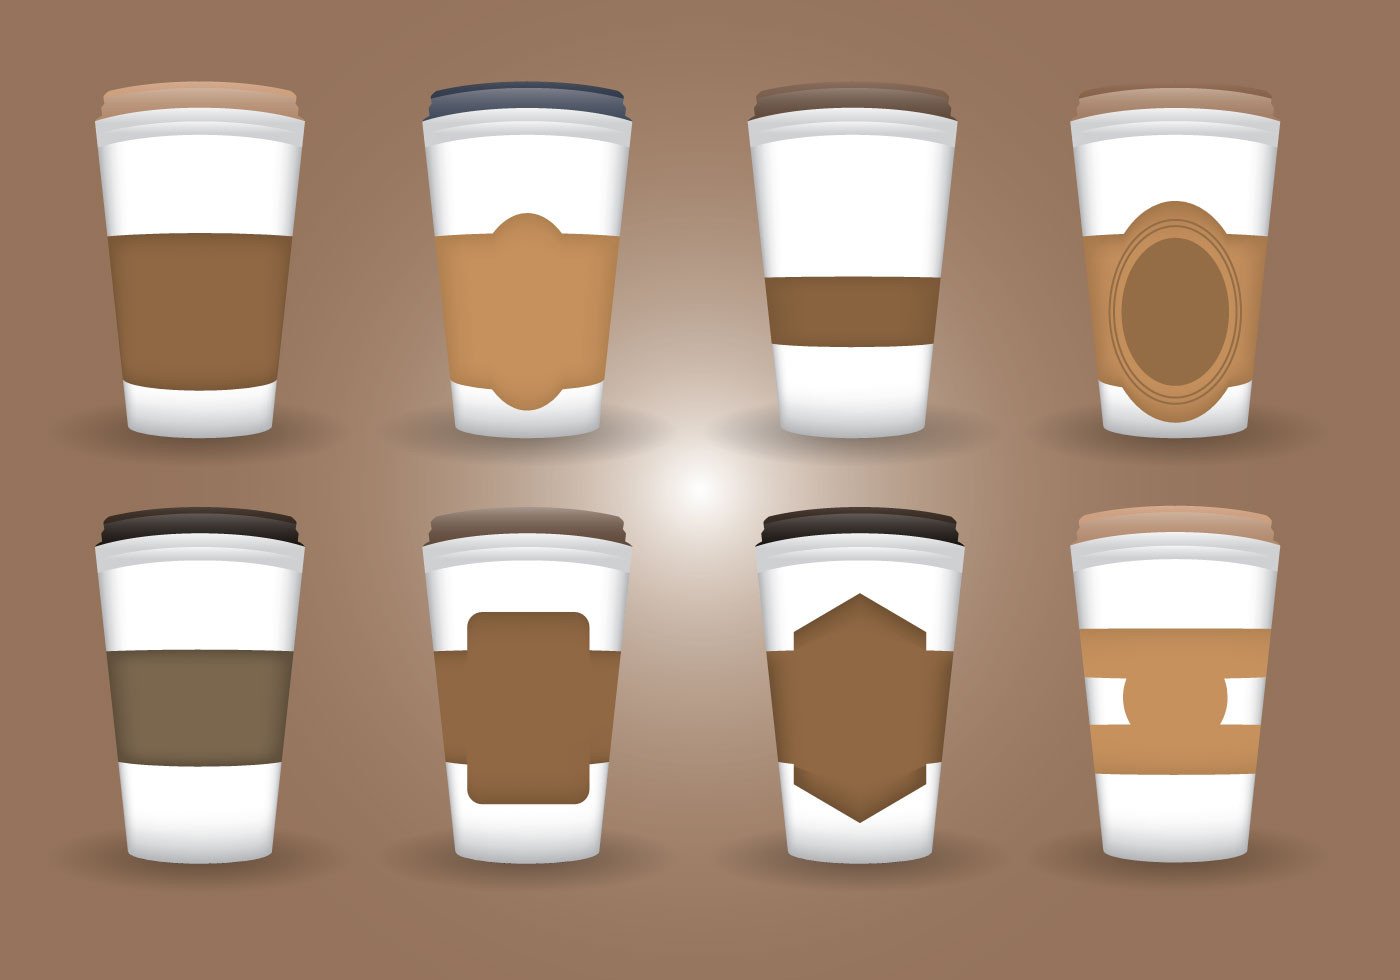 Coffee Sleeve Template Illustrator Coffee Sleeve Vector Download Free Vector Art Stock